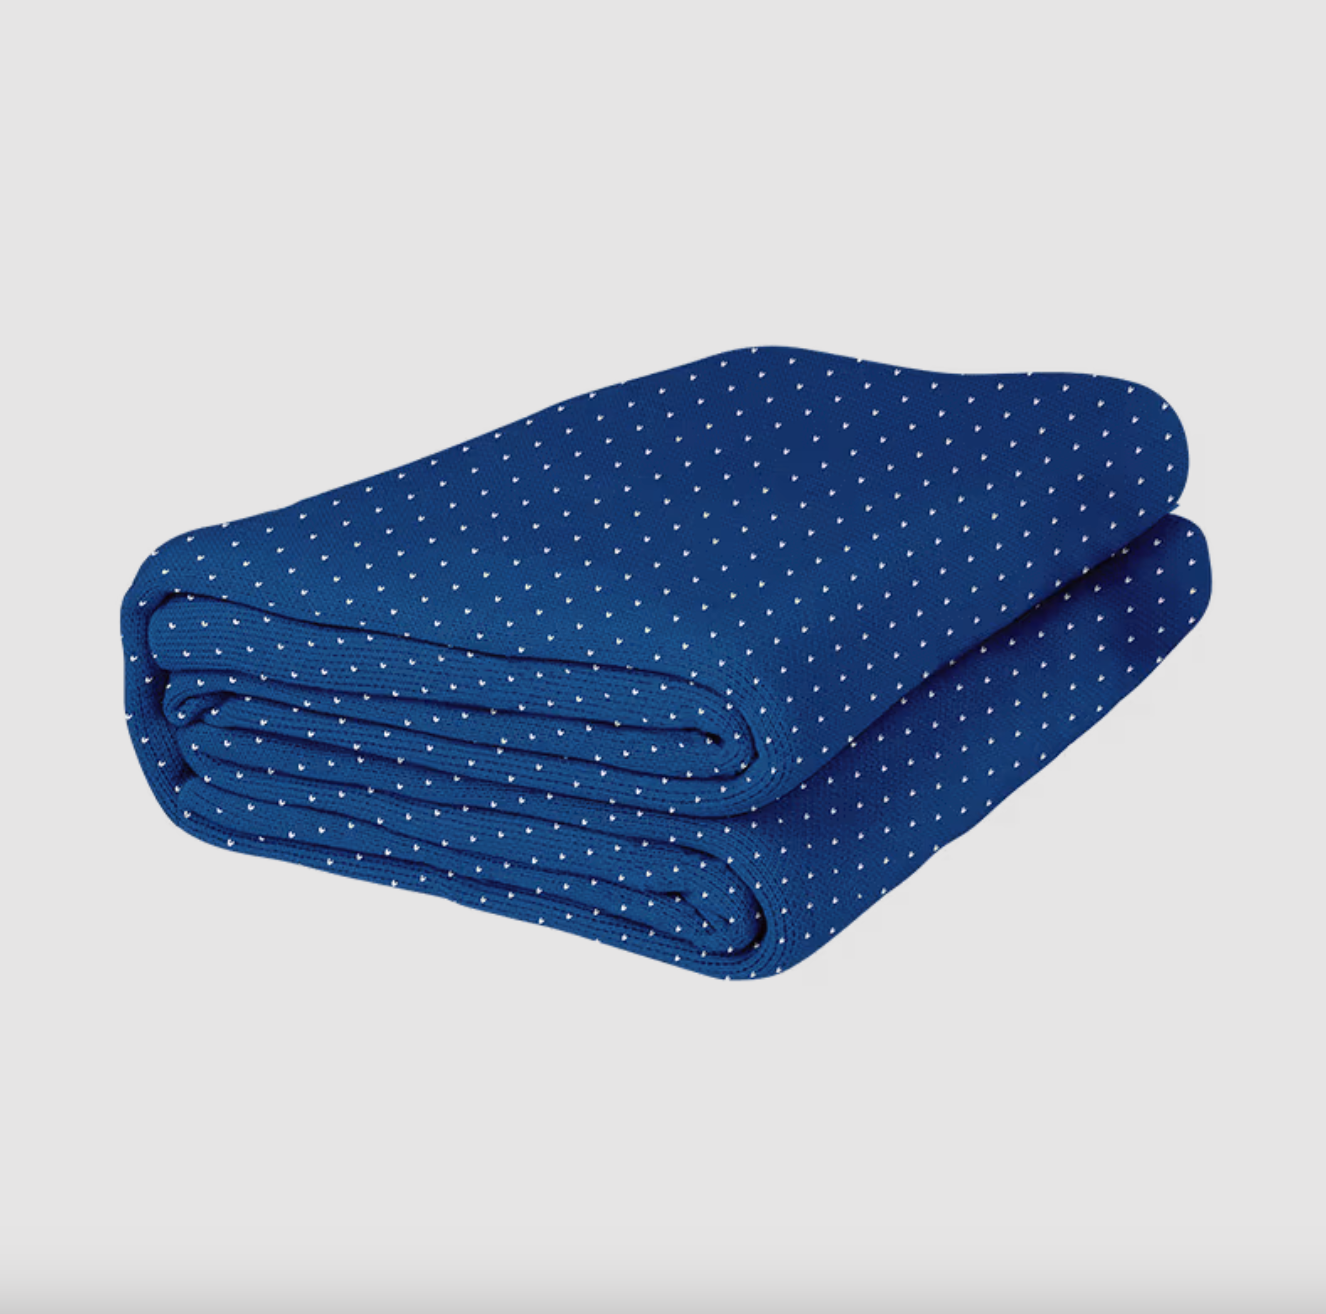 Big Blanket Co. Premium Woven™ Blanket